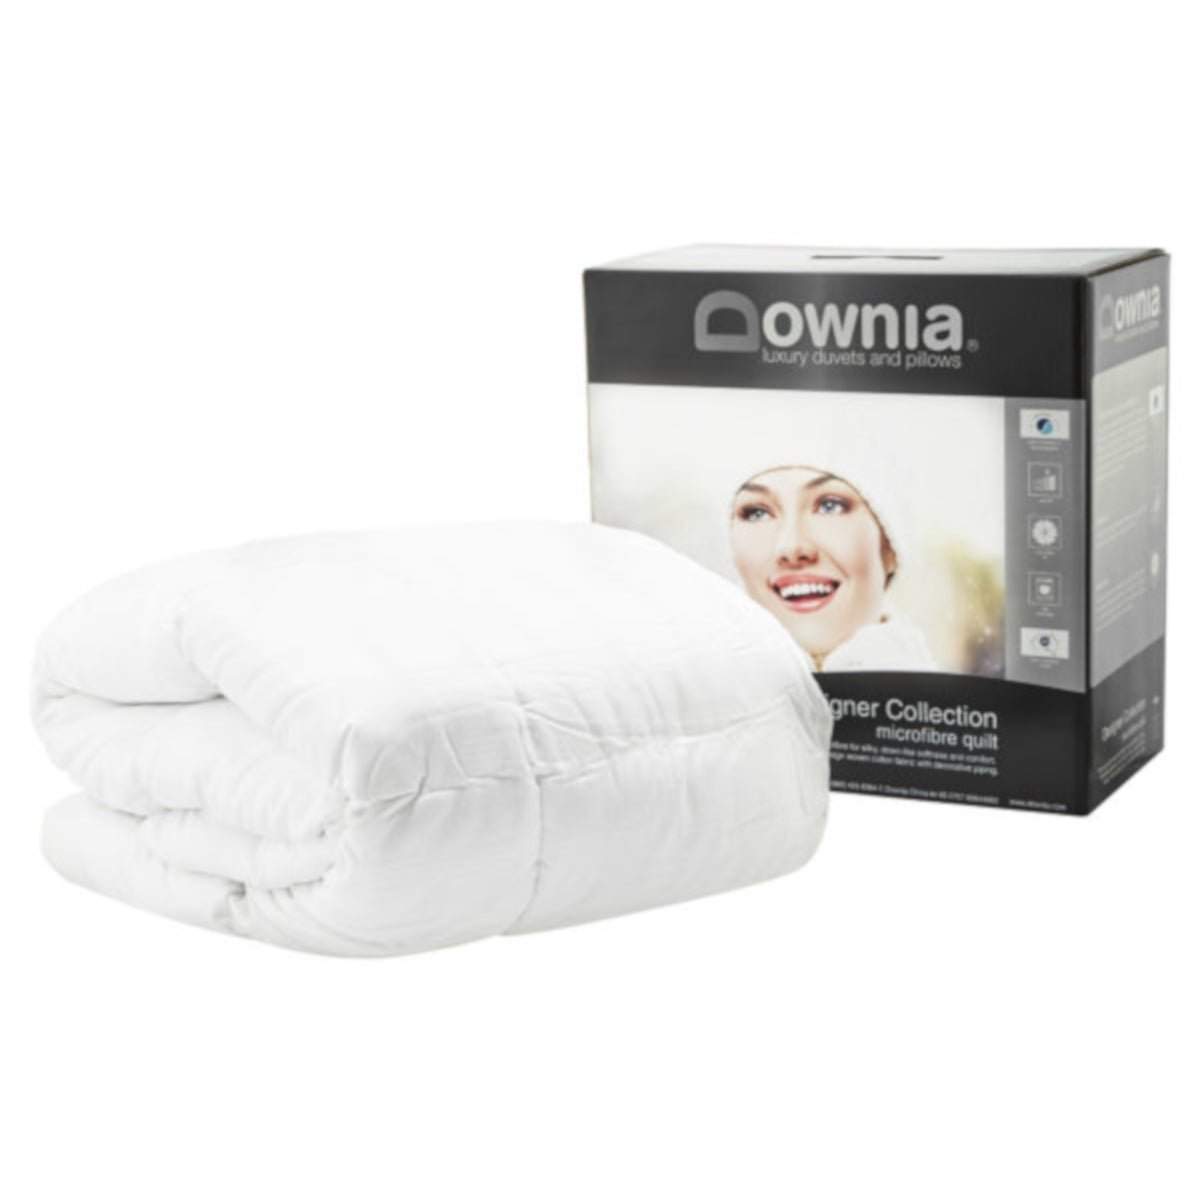 Downia Designer Collection Microfibre Quilt - Mattress & Pillow ScienceQuilts & Doonas